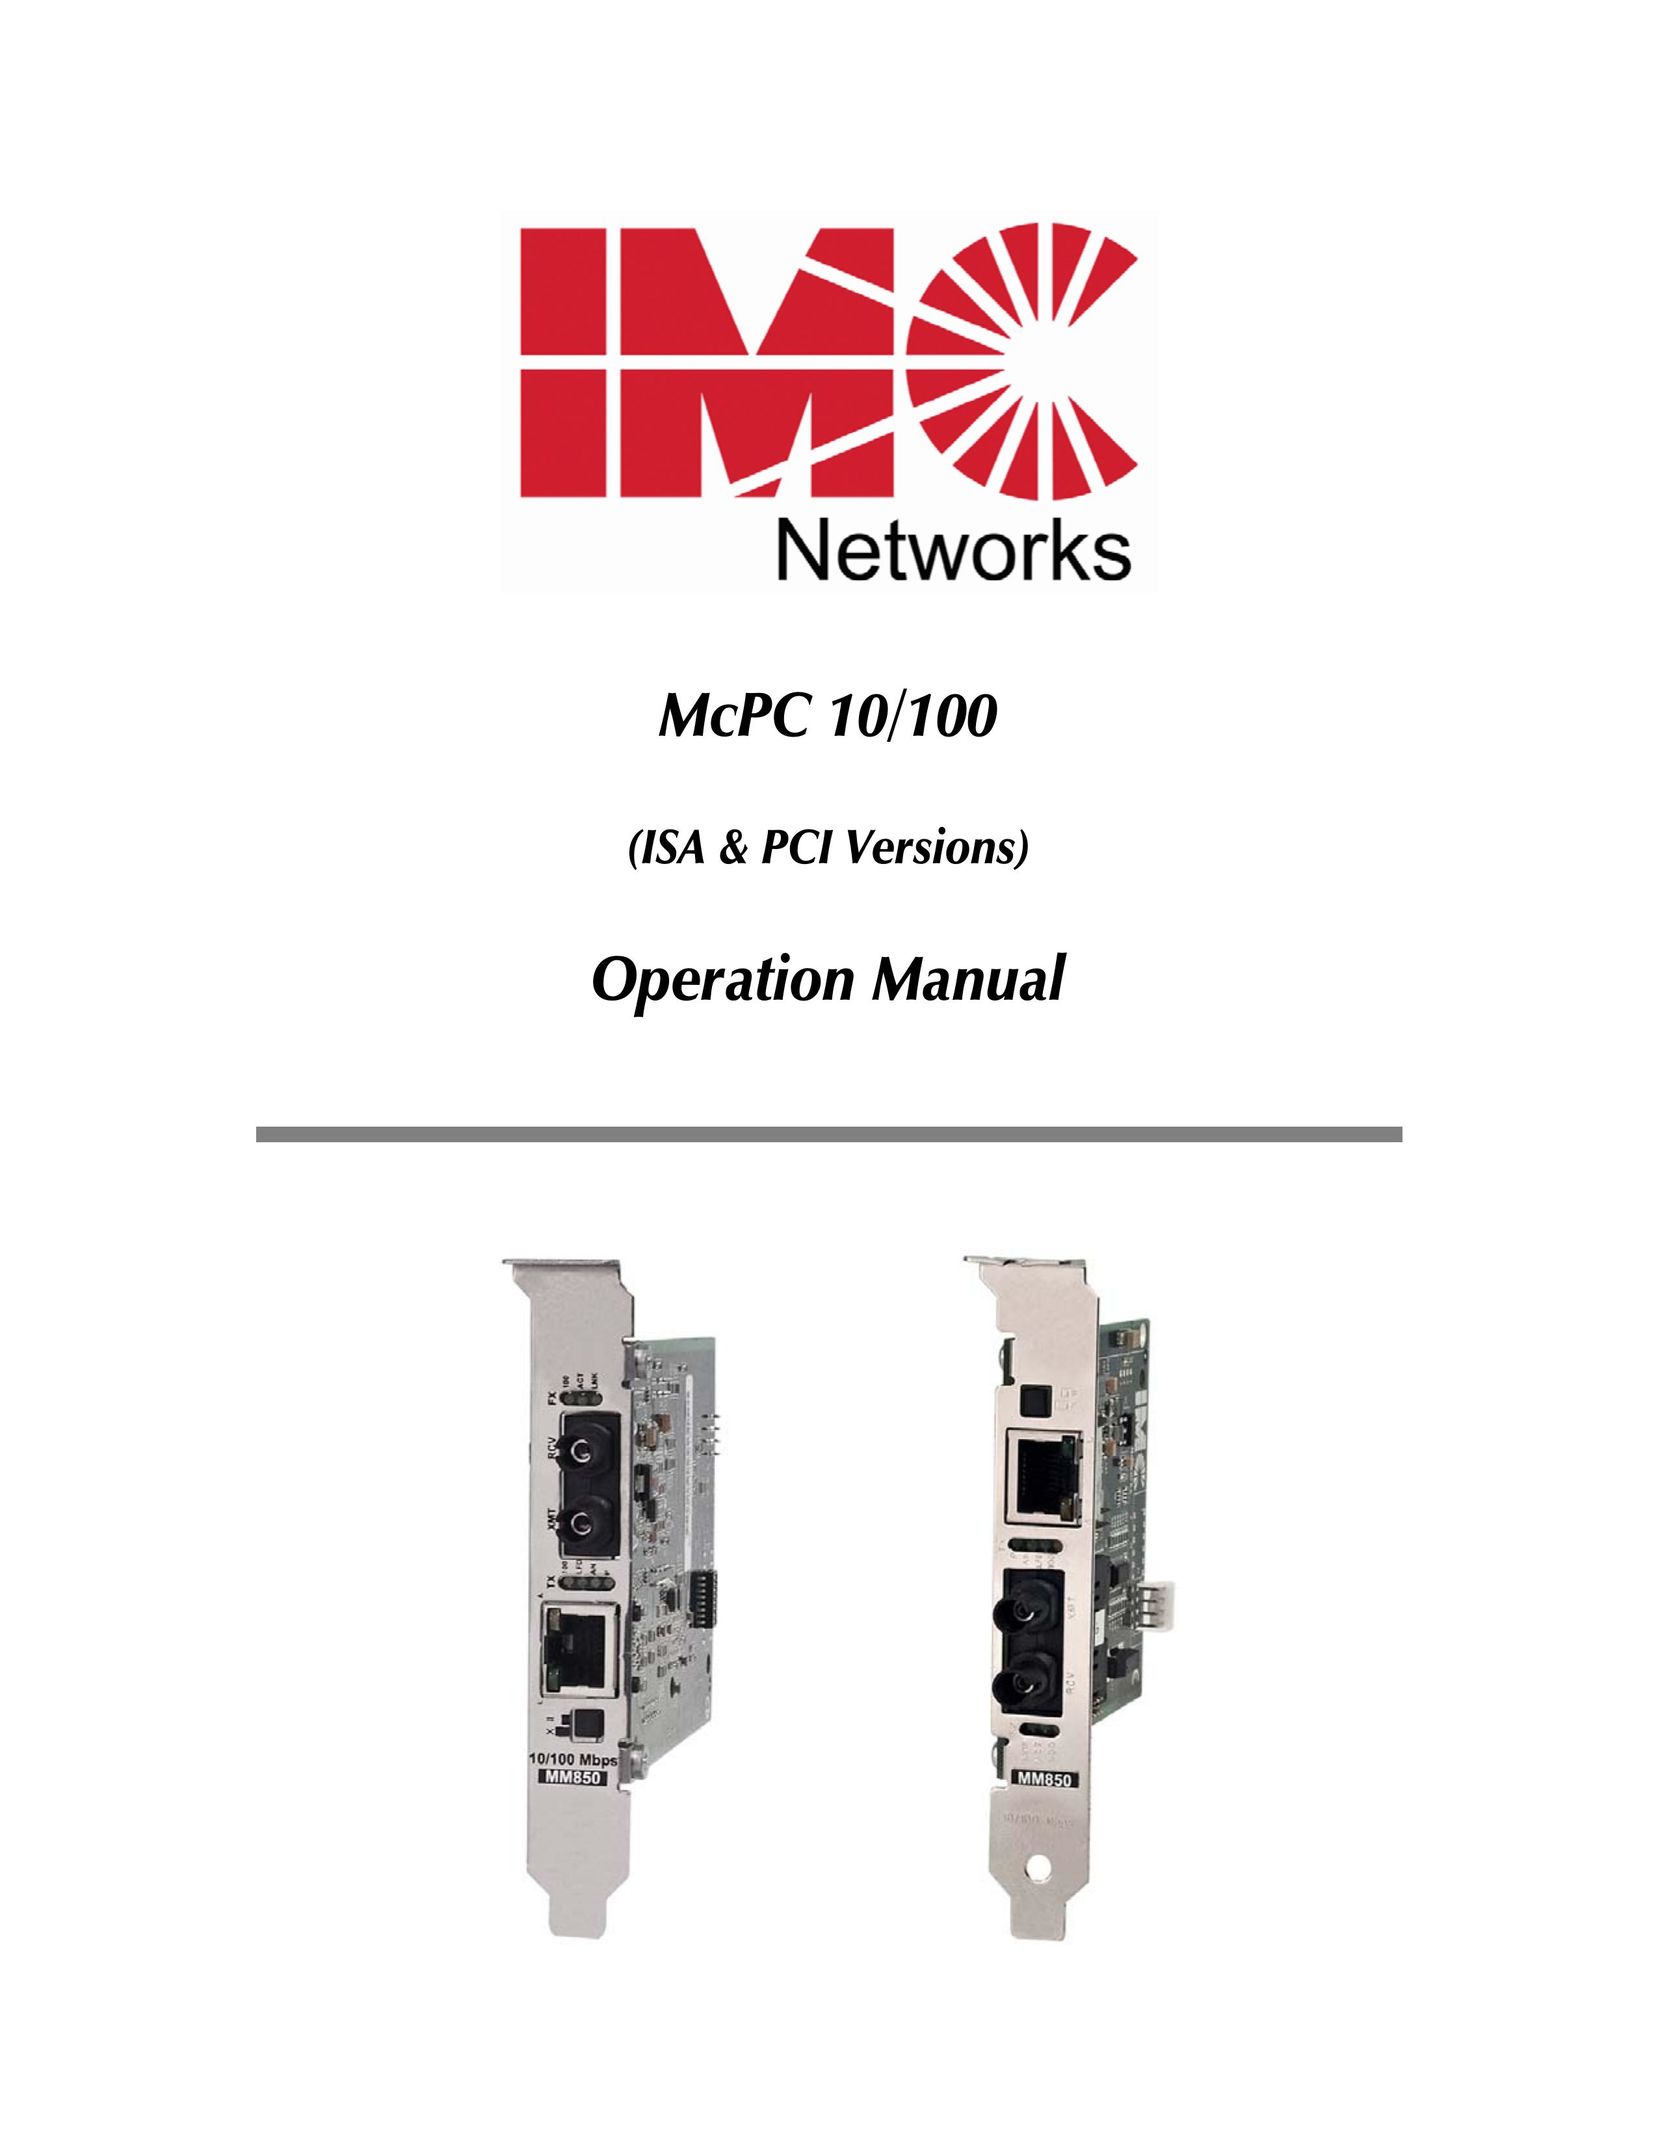 IMC Networks MCPC 10/100 Computer Hardware User Manual